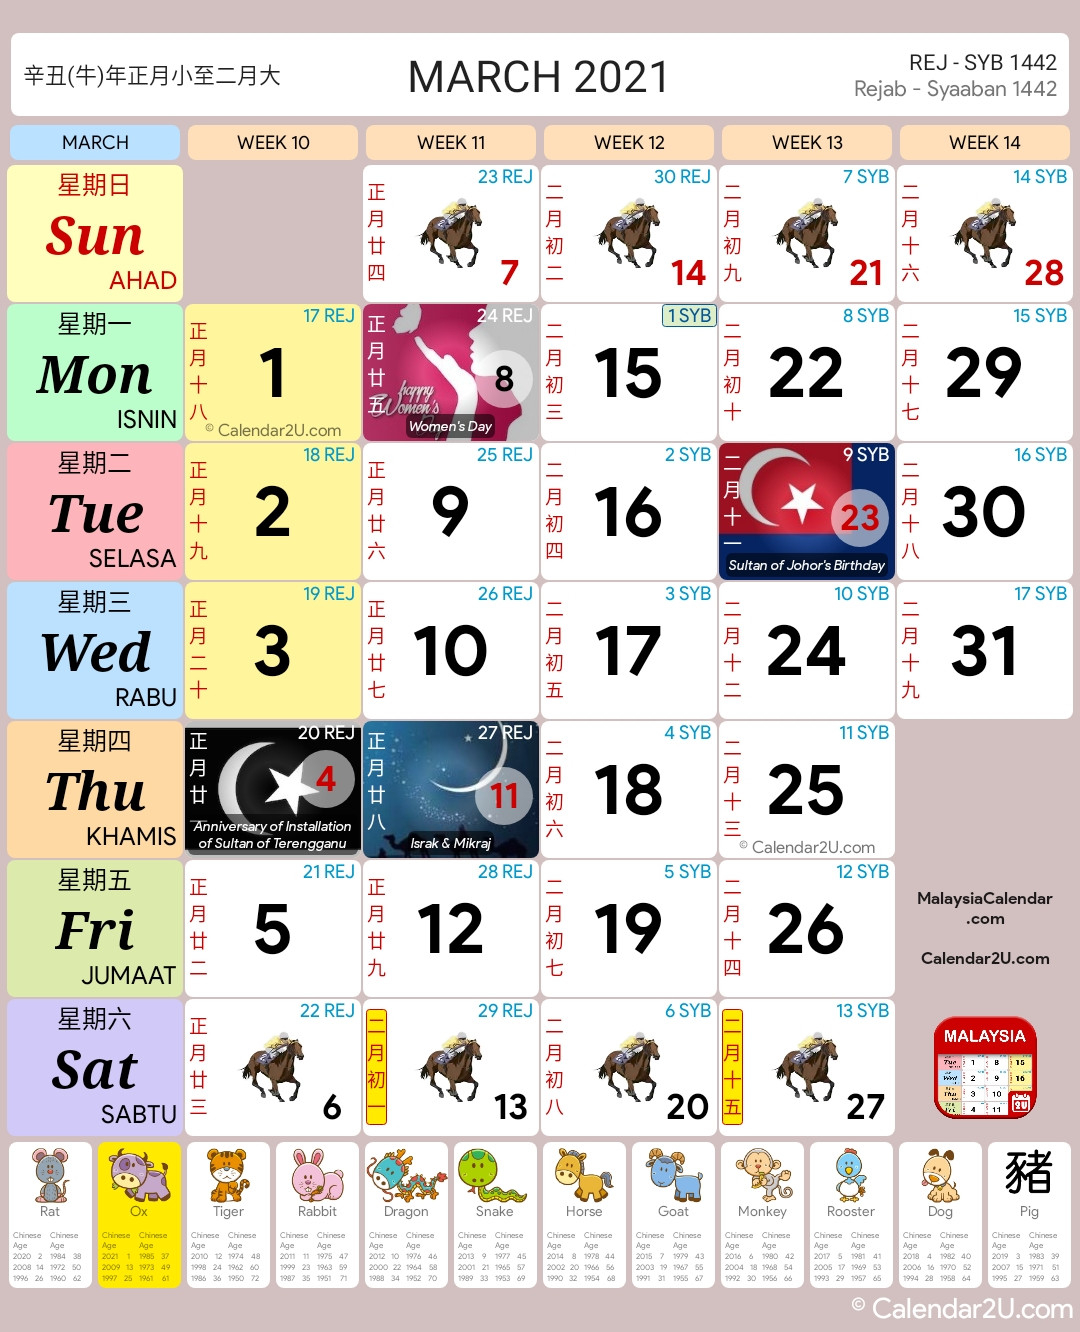 Malaysia Calendar - Blog-Blog On Malaysia School Holidays 2021